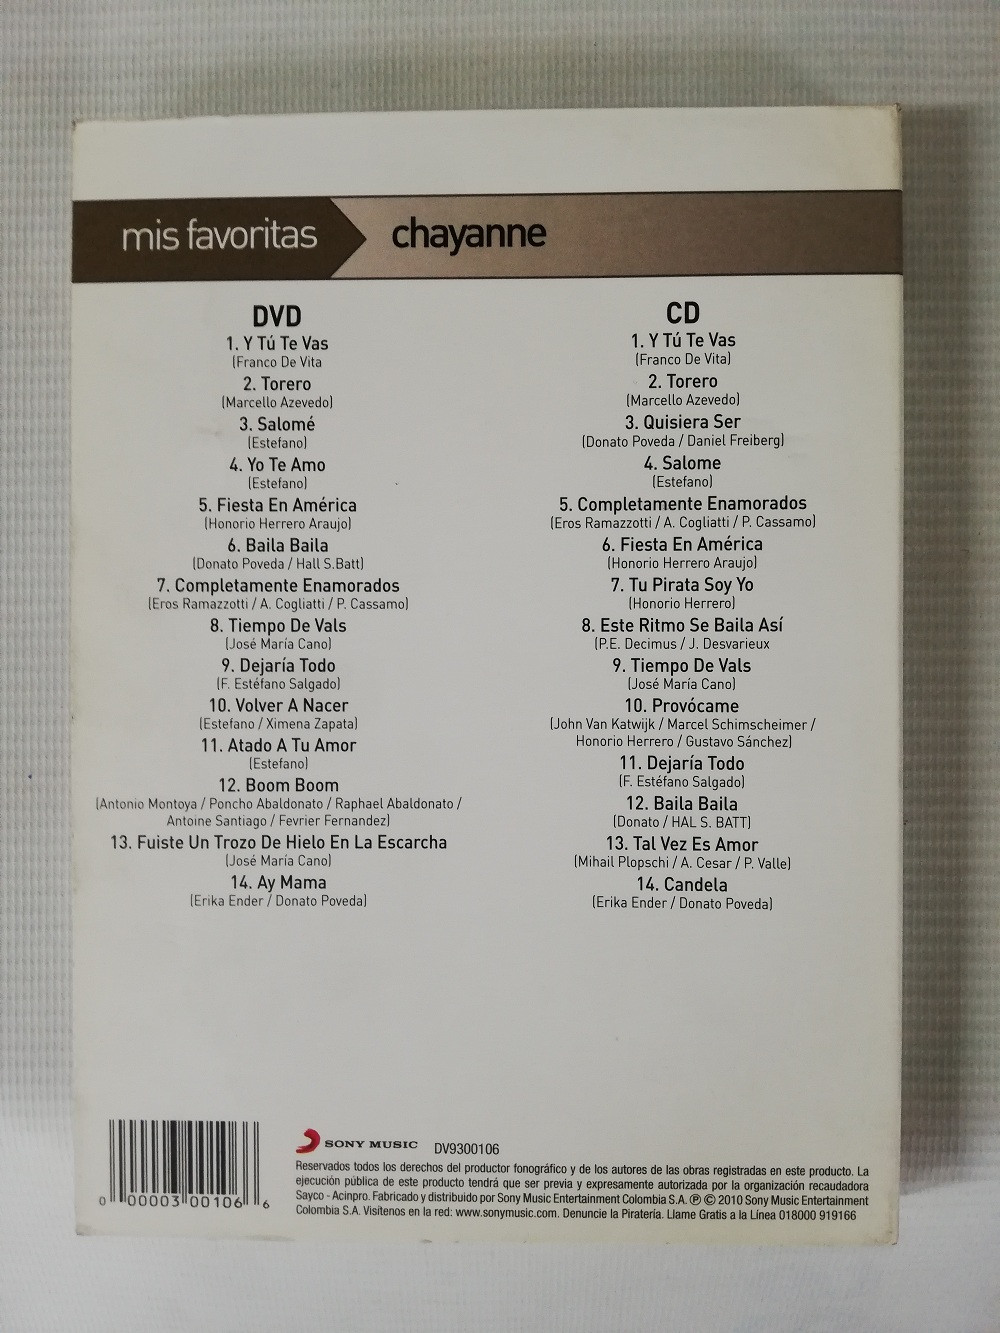 Imagen CD + DVD CHAYANNE - MIS FAVORITAS 2